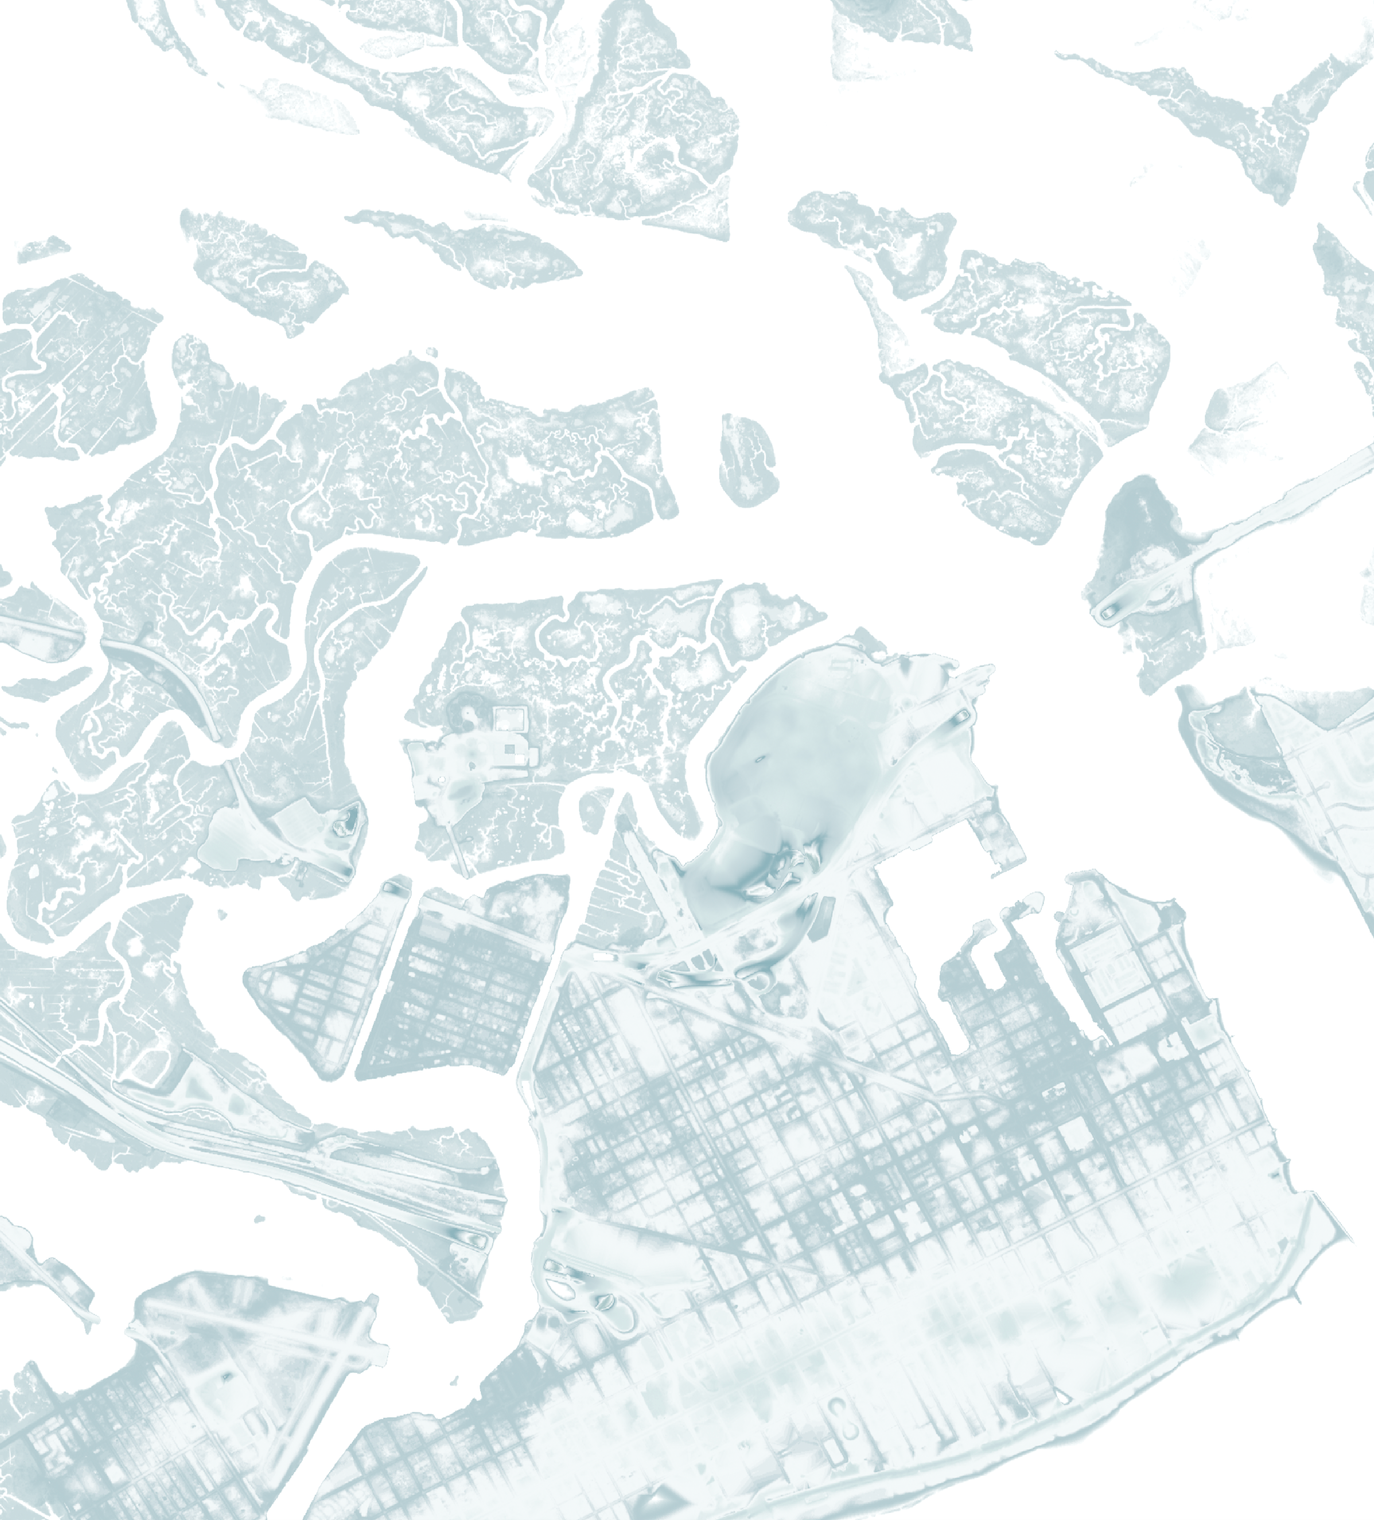 Atlantic City Map Print